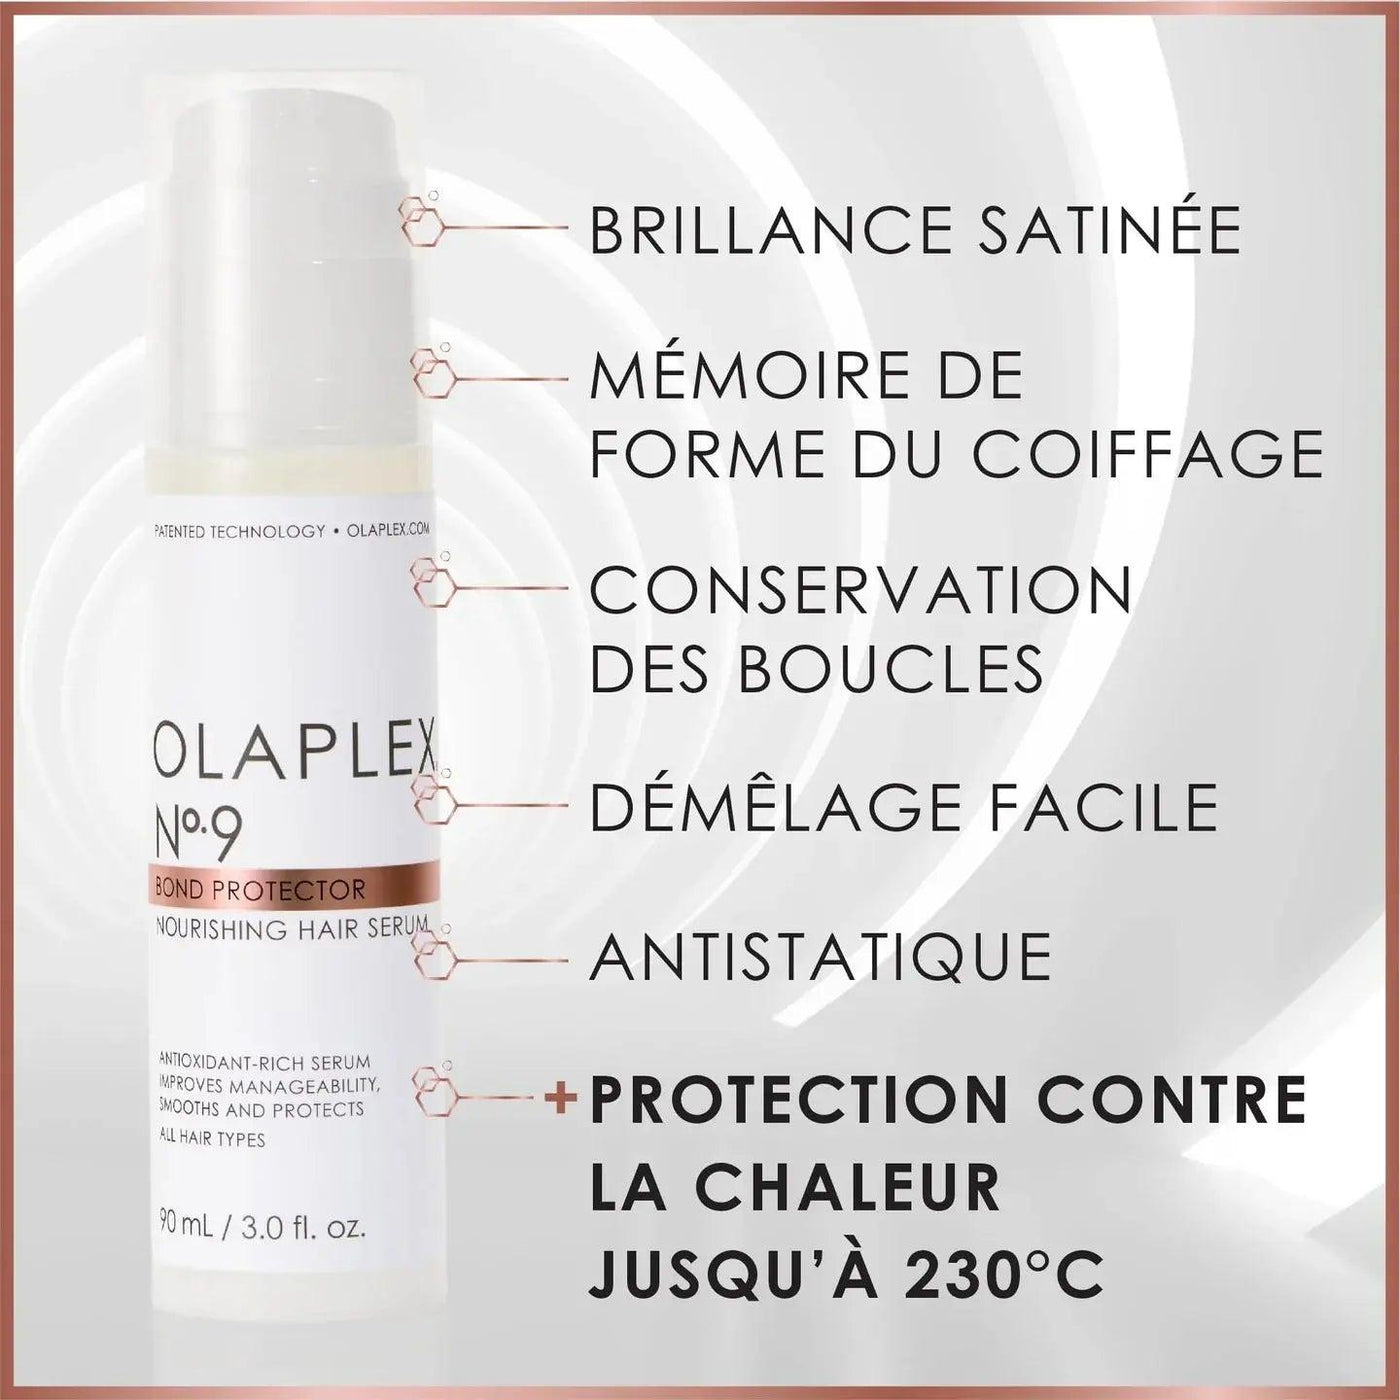 No.9 Bond Protector Nourishing Hair Serum Olaplex Boutique Deauville